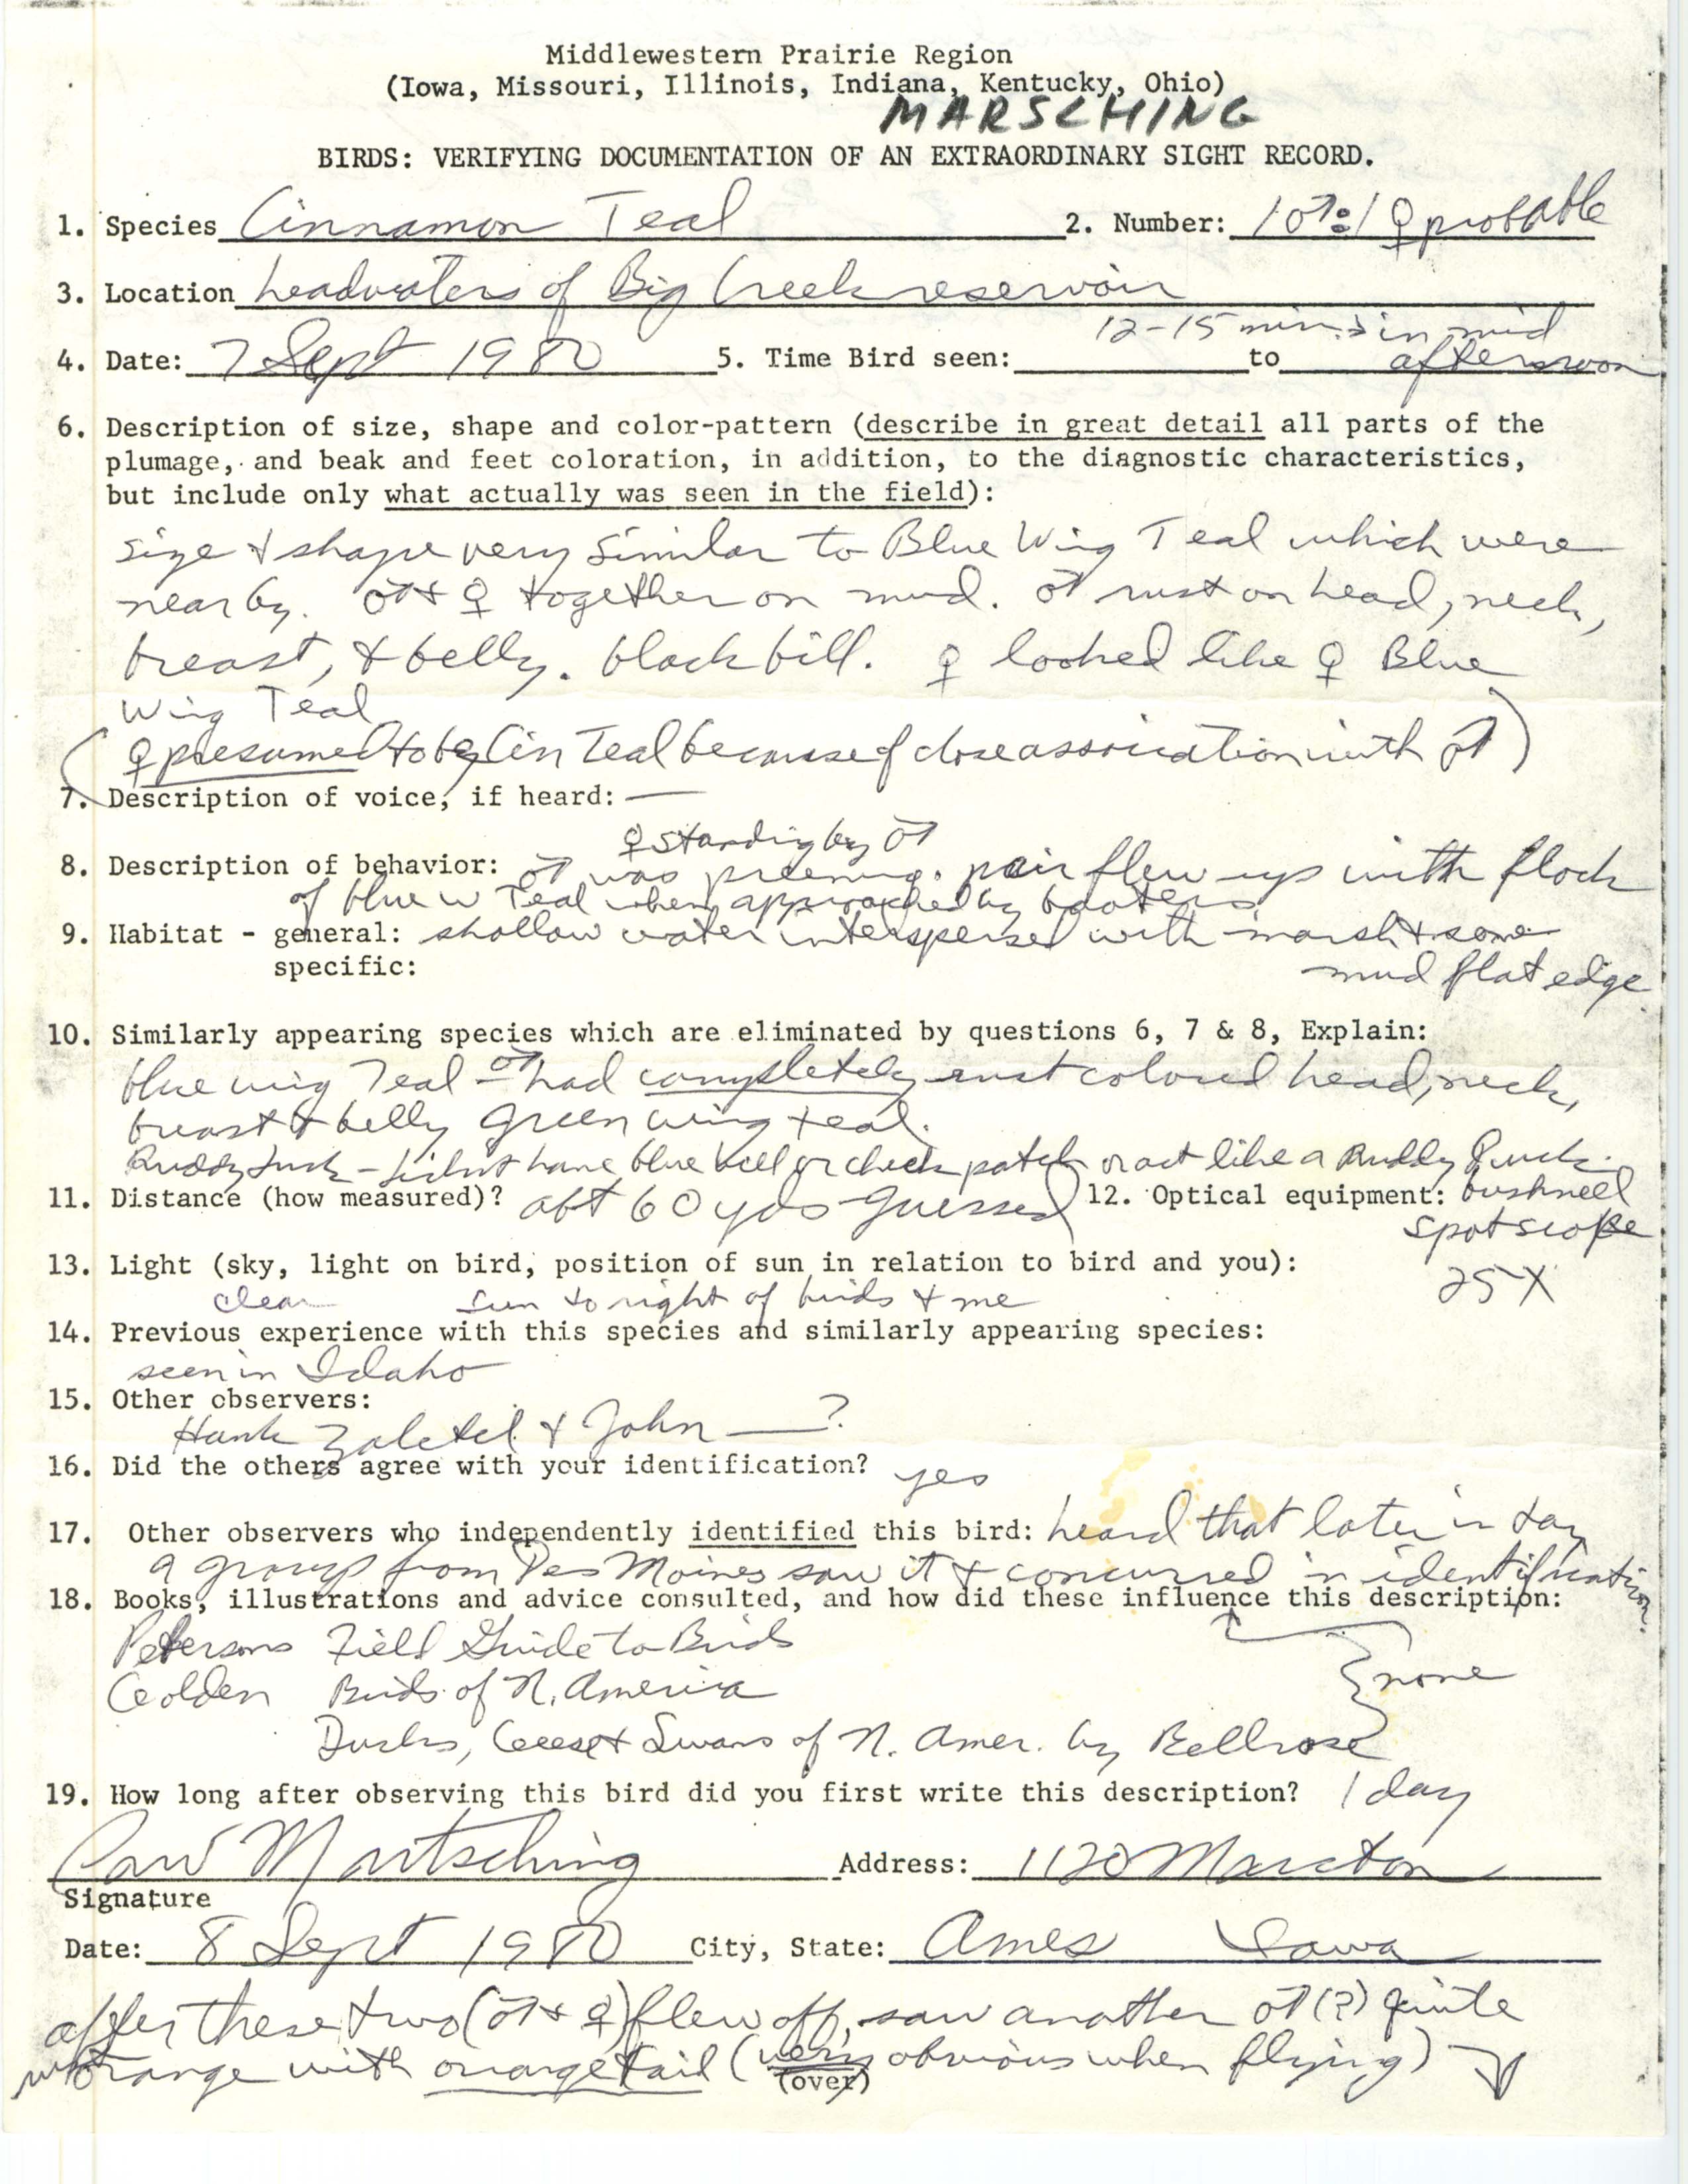 Rare bird documentation form for Cinnamon Teal at Big Creek Reservoir, 1980